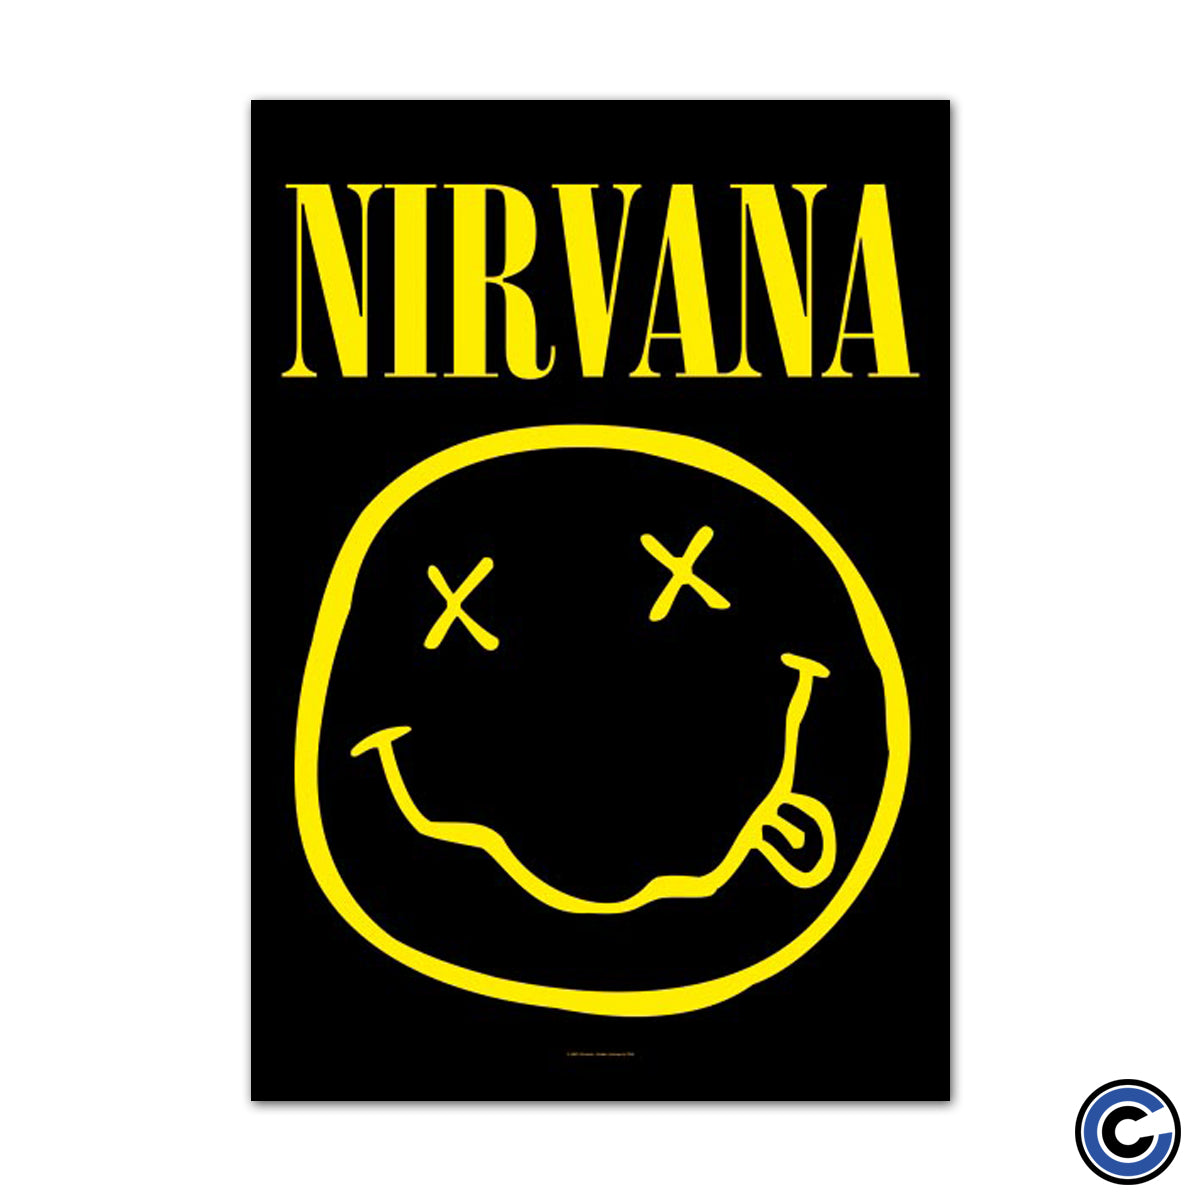 Nirvana "Smiley" Poster